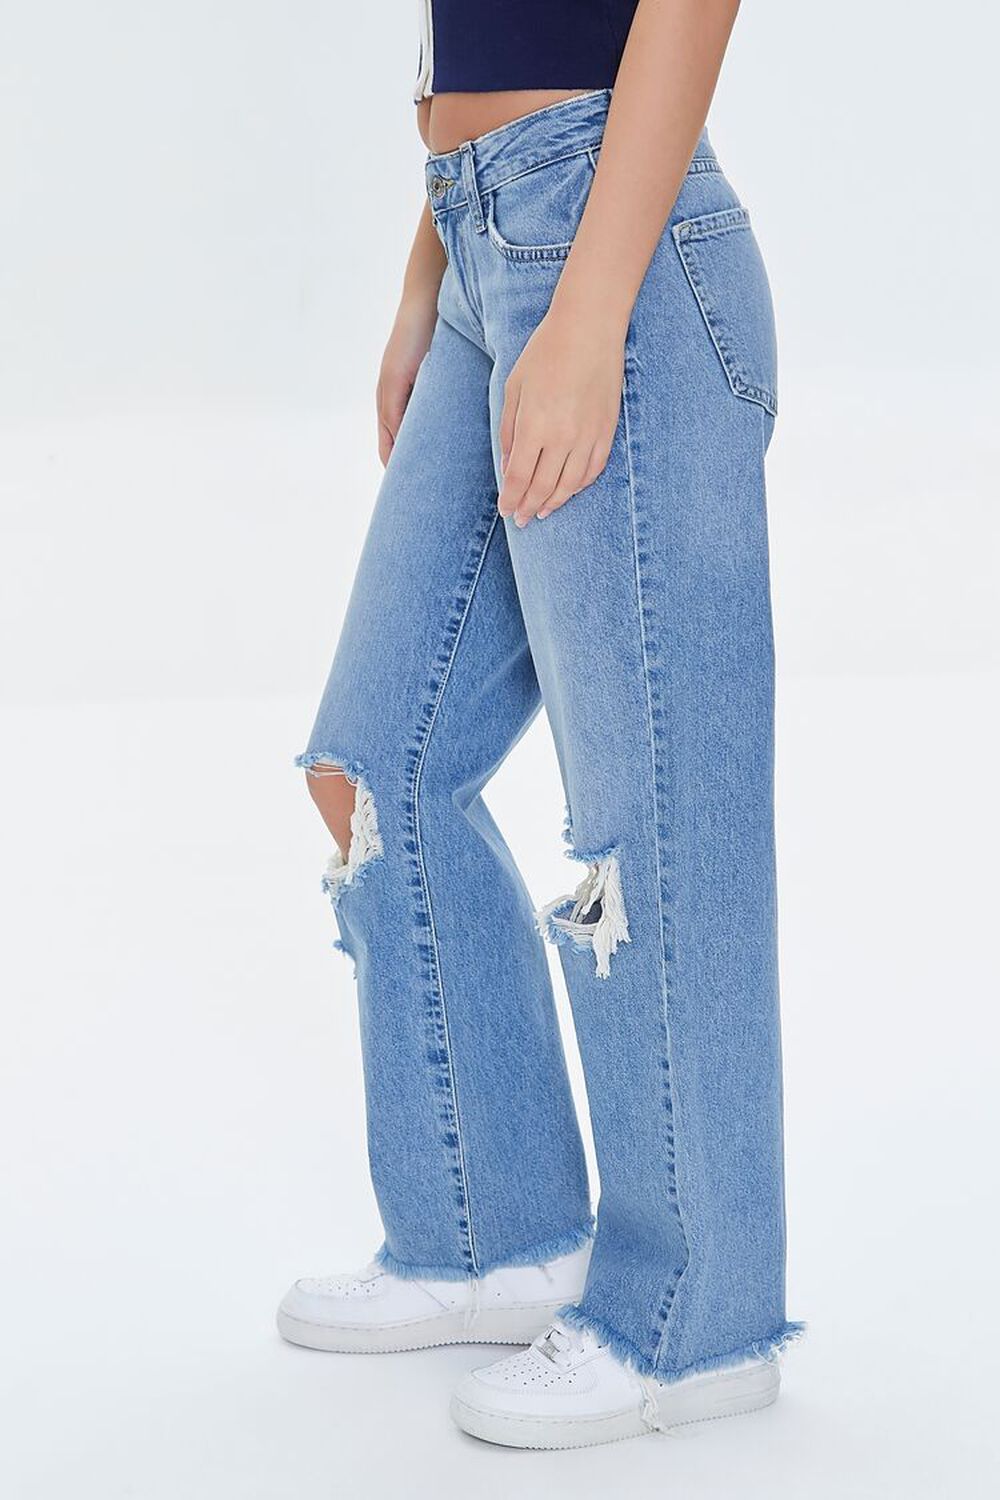 MEDIUM DENIM Recycled Cotton Distressed Straight-Leg Jeans, image 3